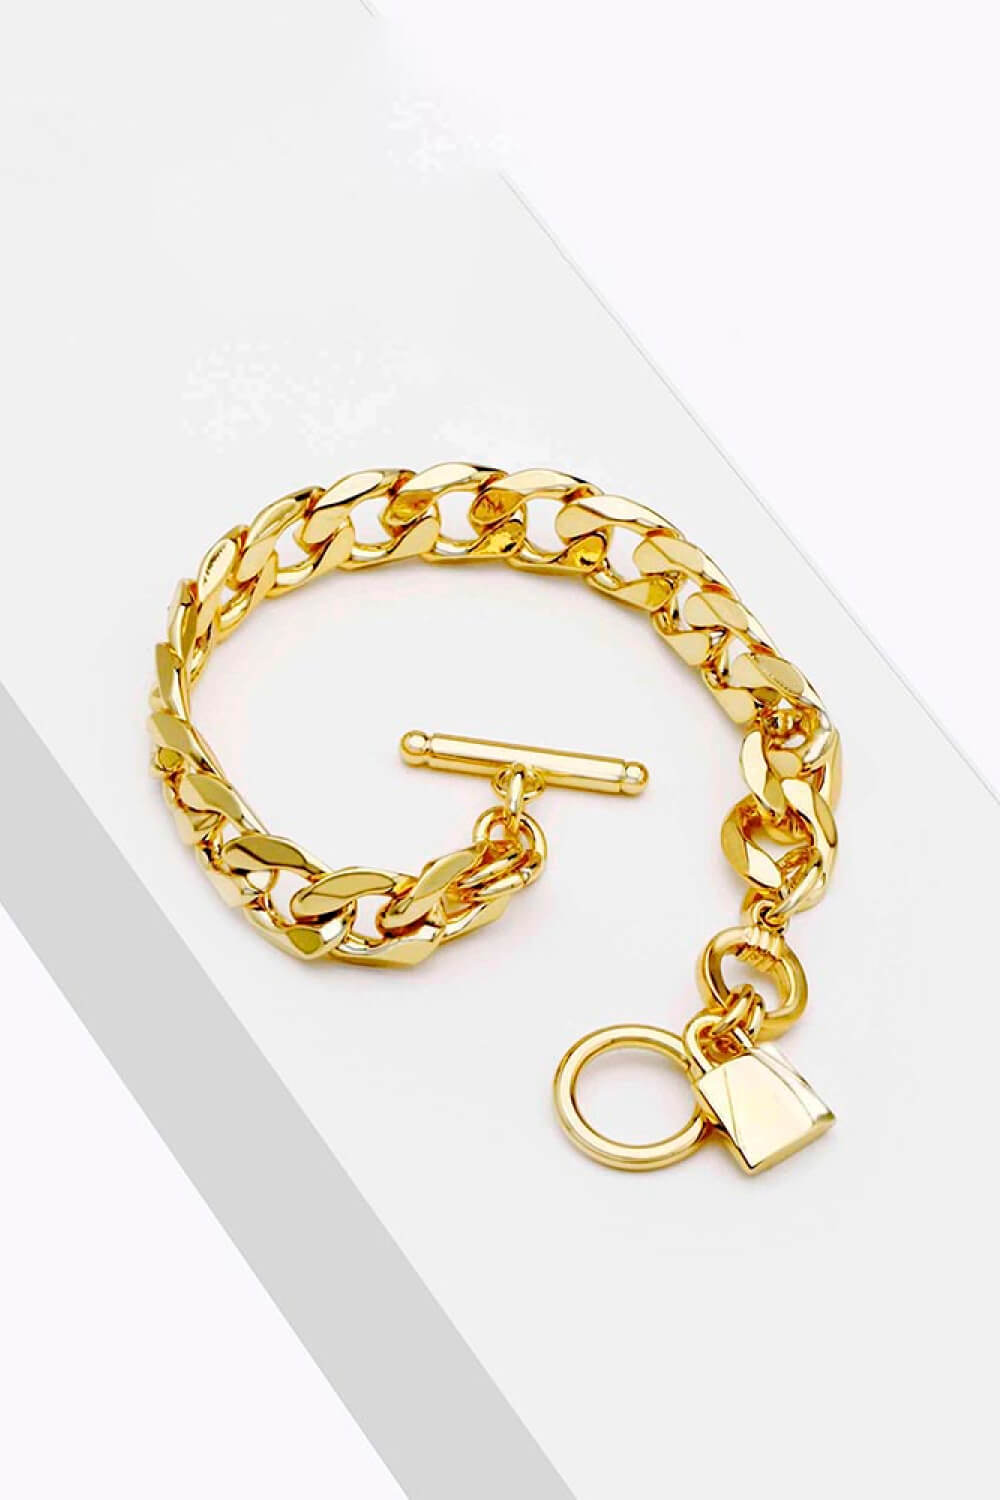 Lock Charm Toggle Clasp Bracelet - Gold / One Size - Women’s Jewelry - Bracelets - 1 - 2024